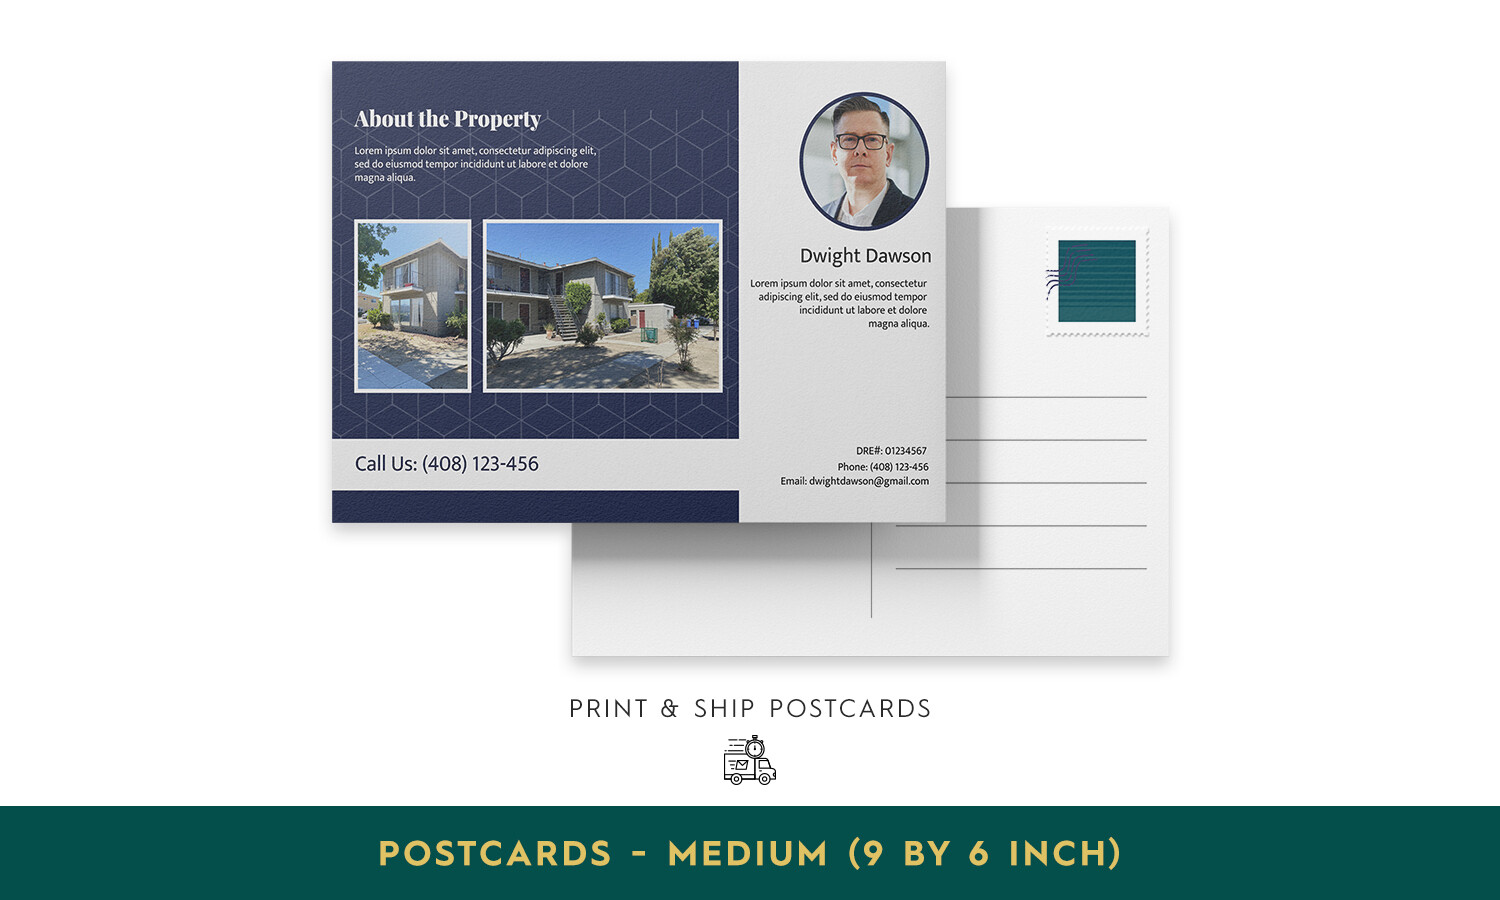 Print & Ship Postcards - Medium